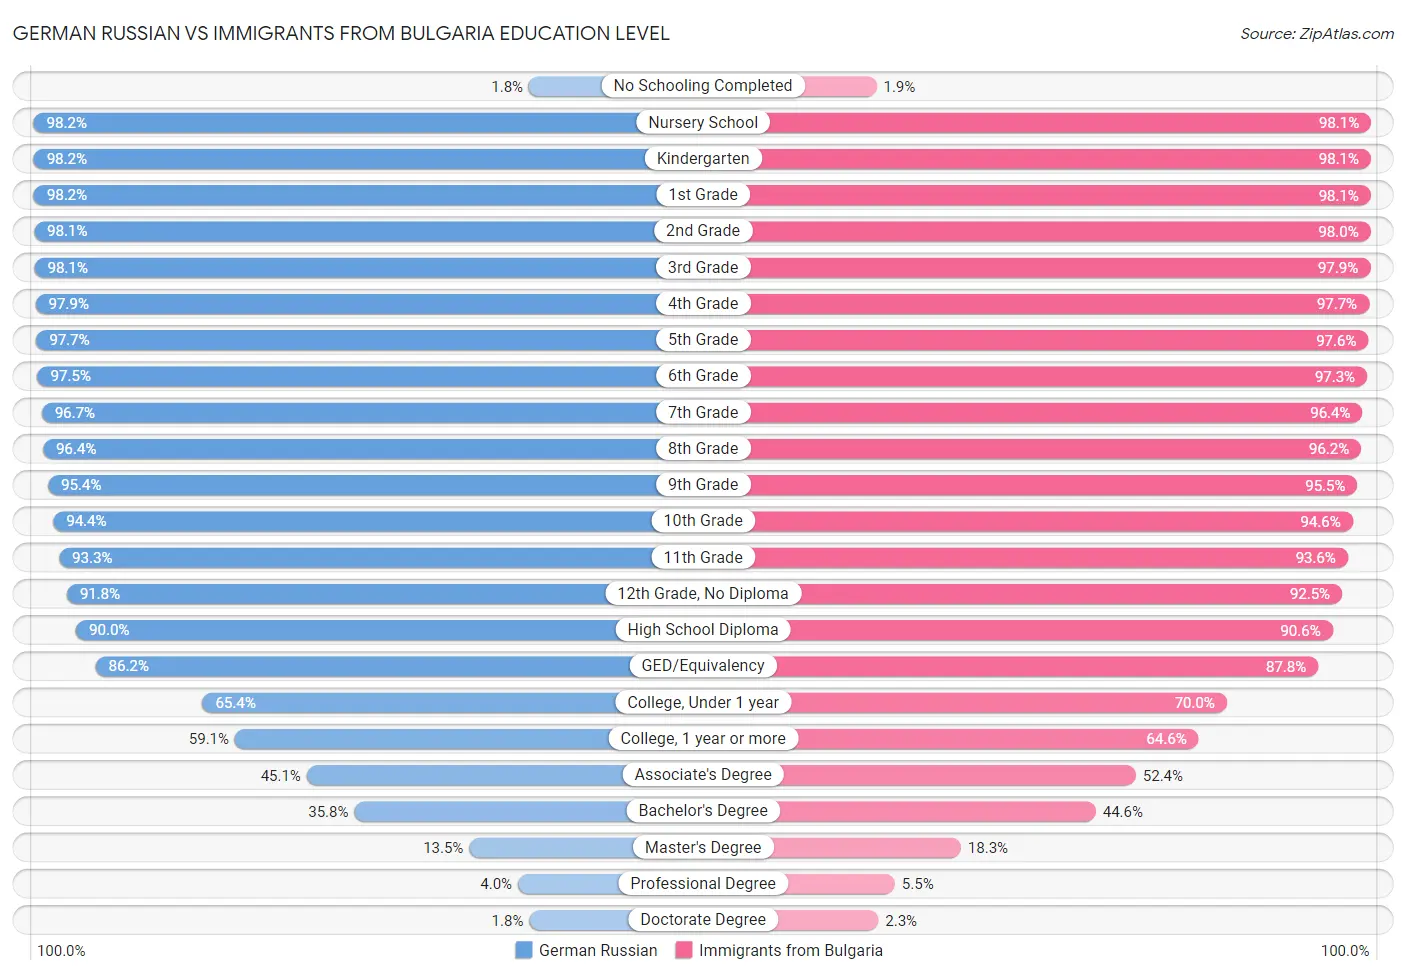 German Russian vs Immigrants from Bulgaria Education Level